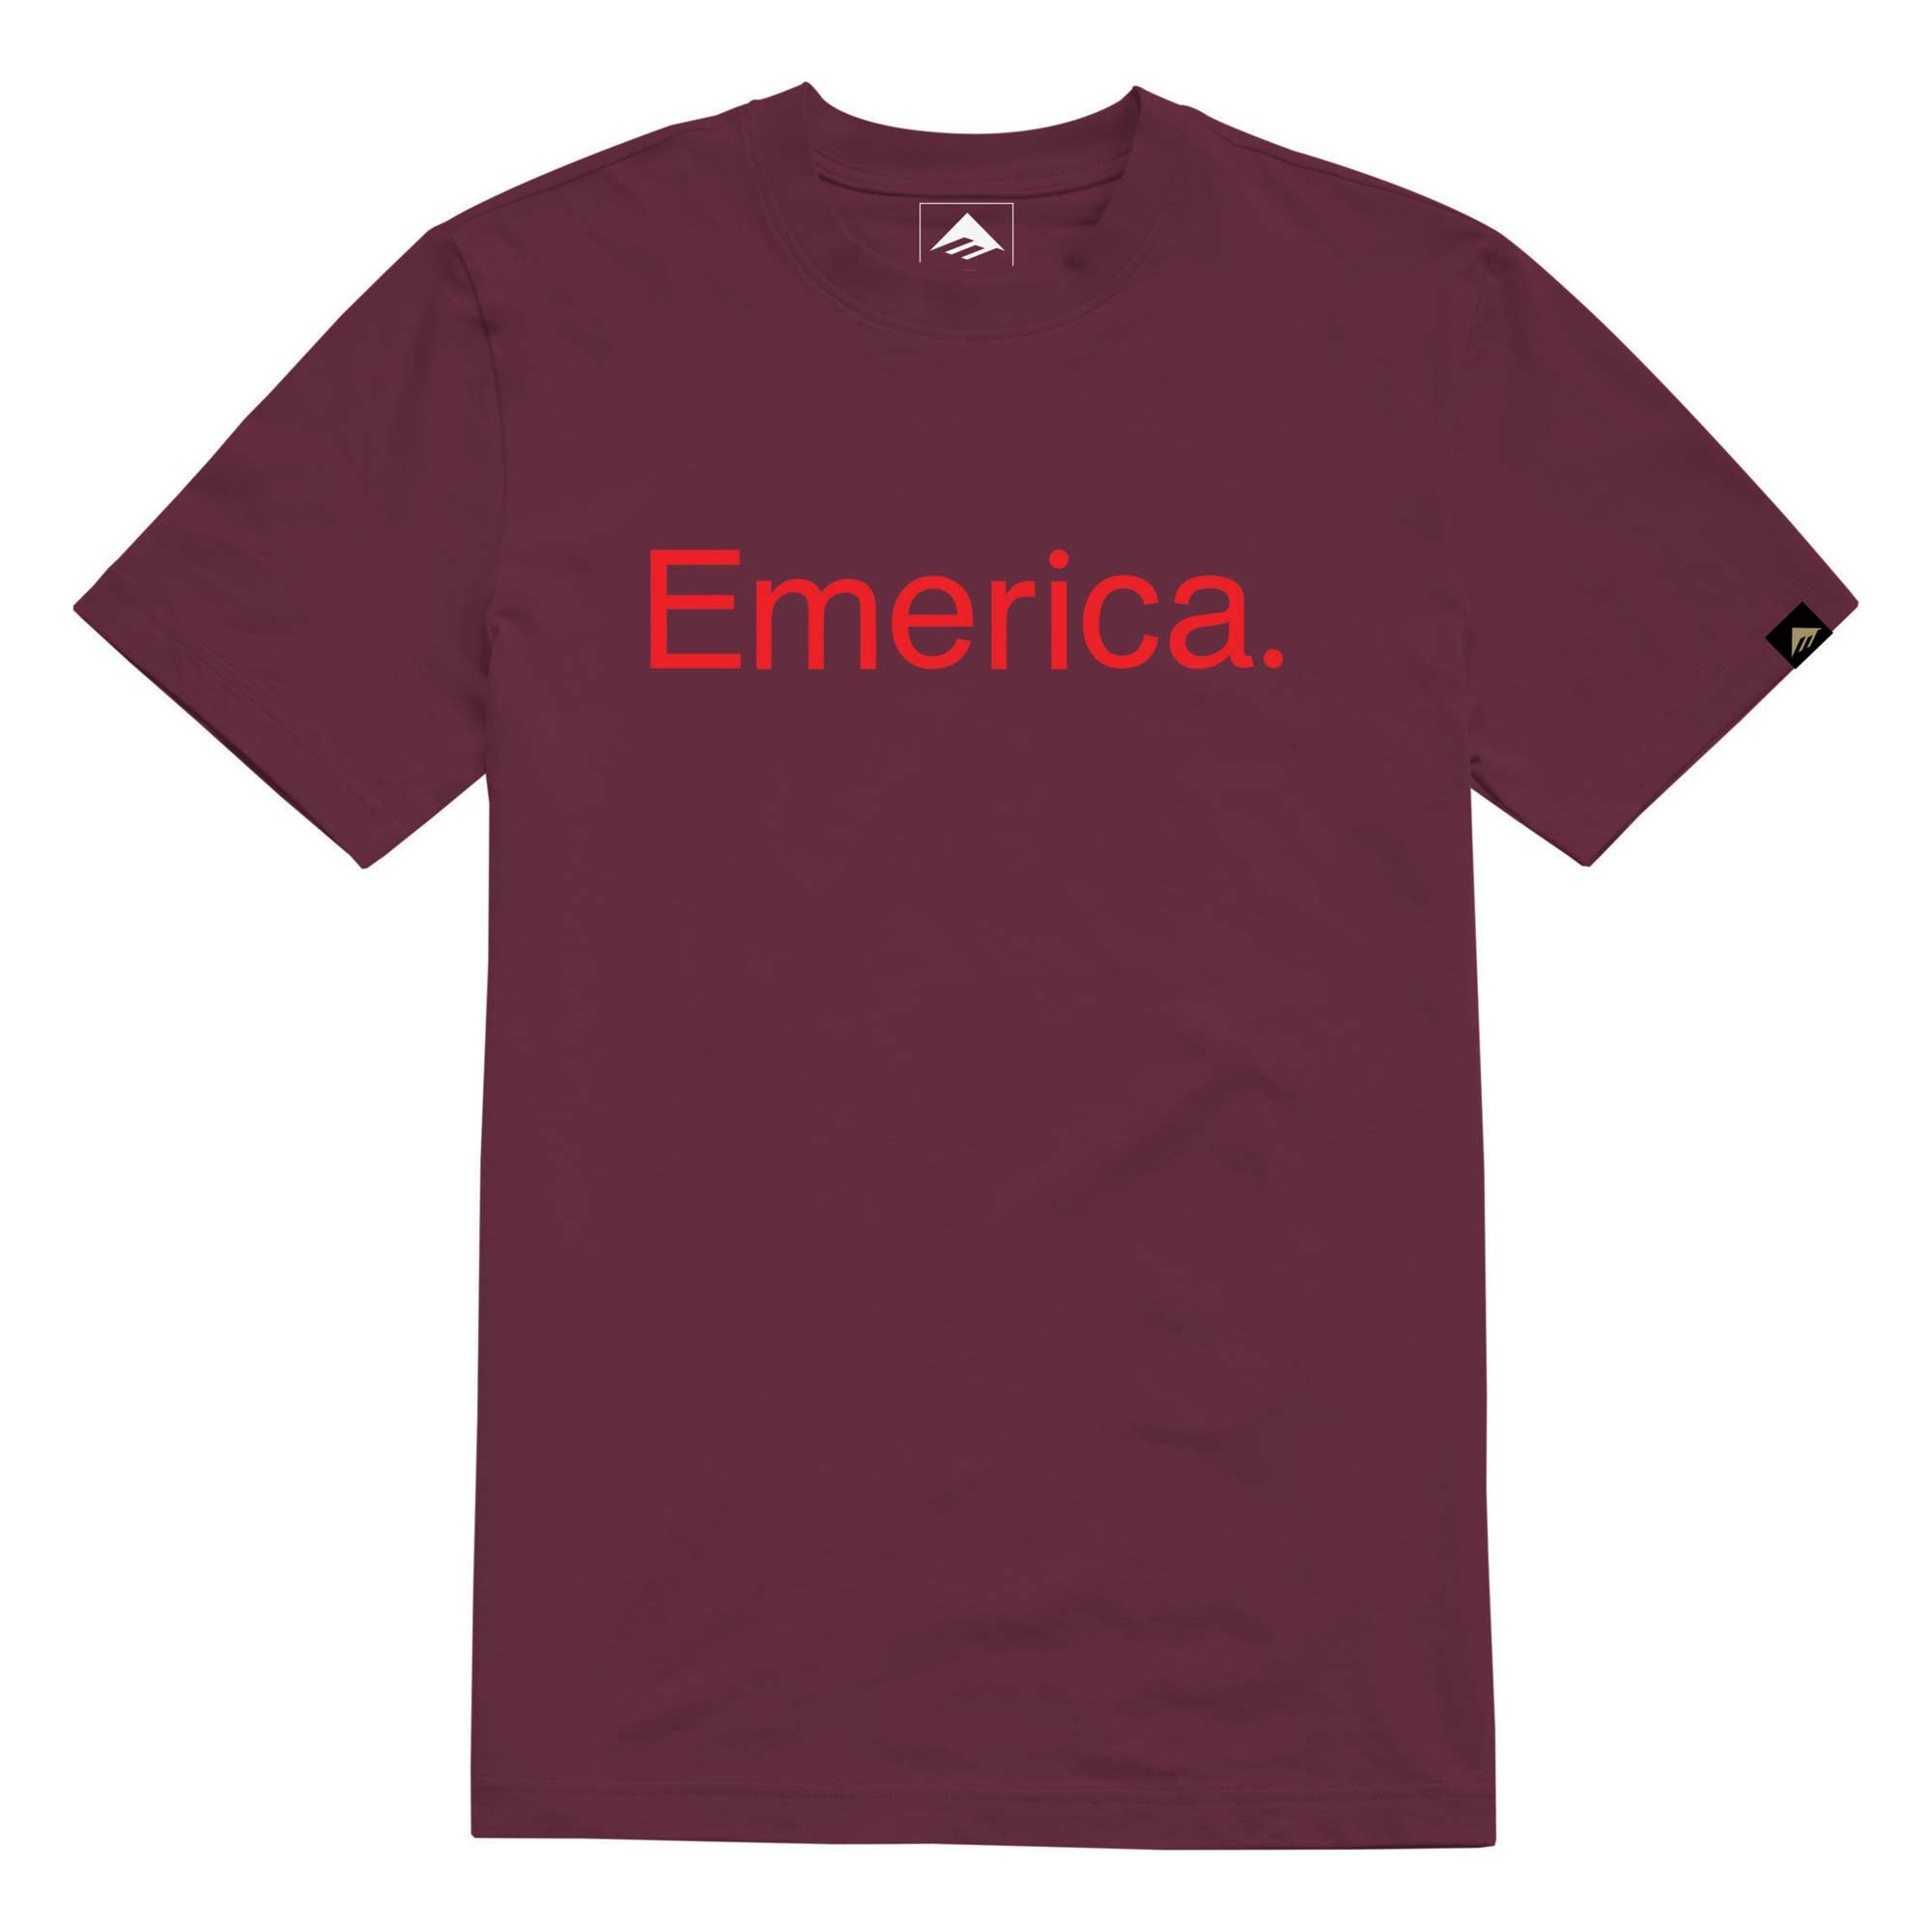 EMERICA T-Shirt PURE 2 burgundy